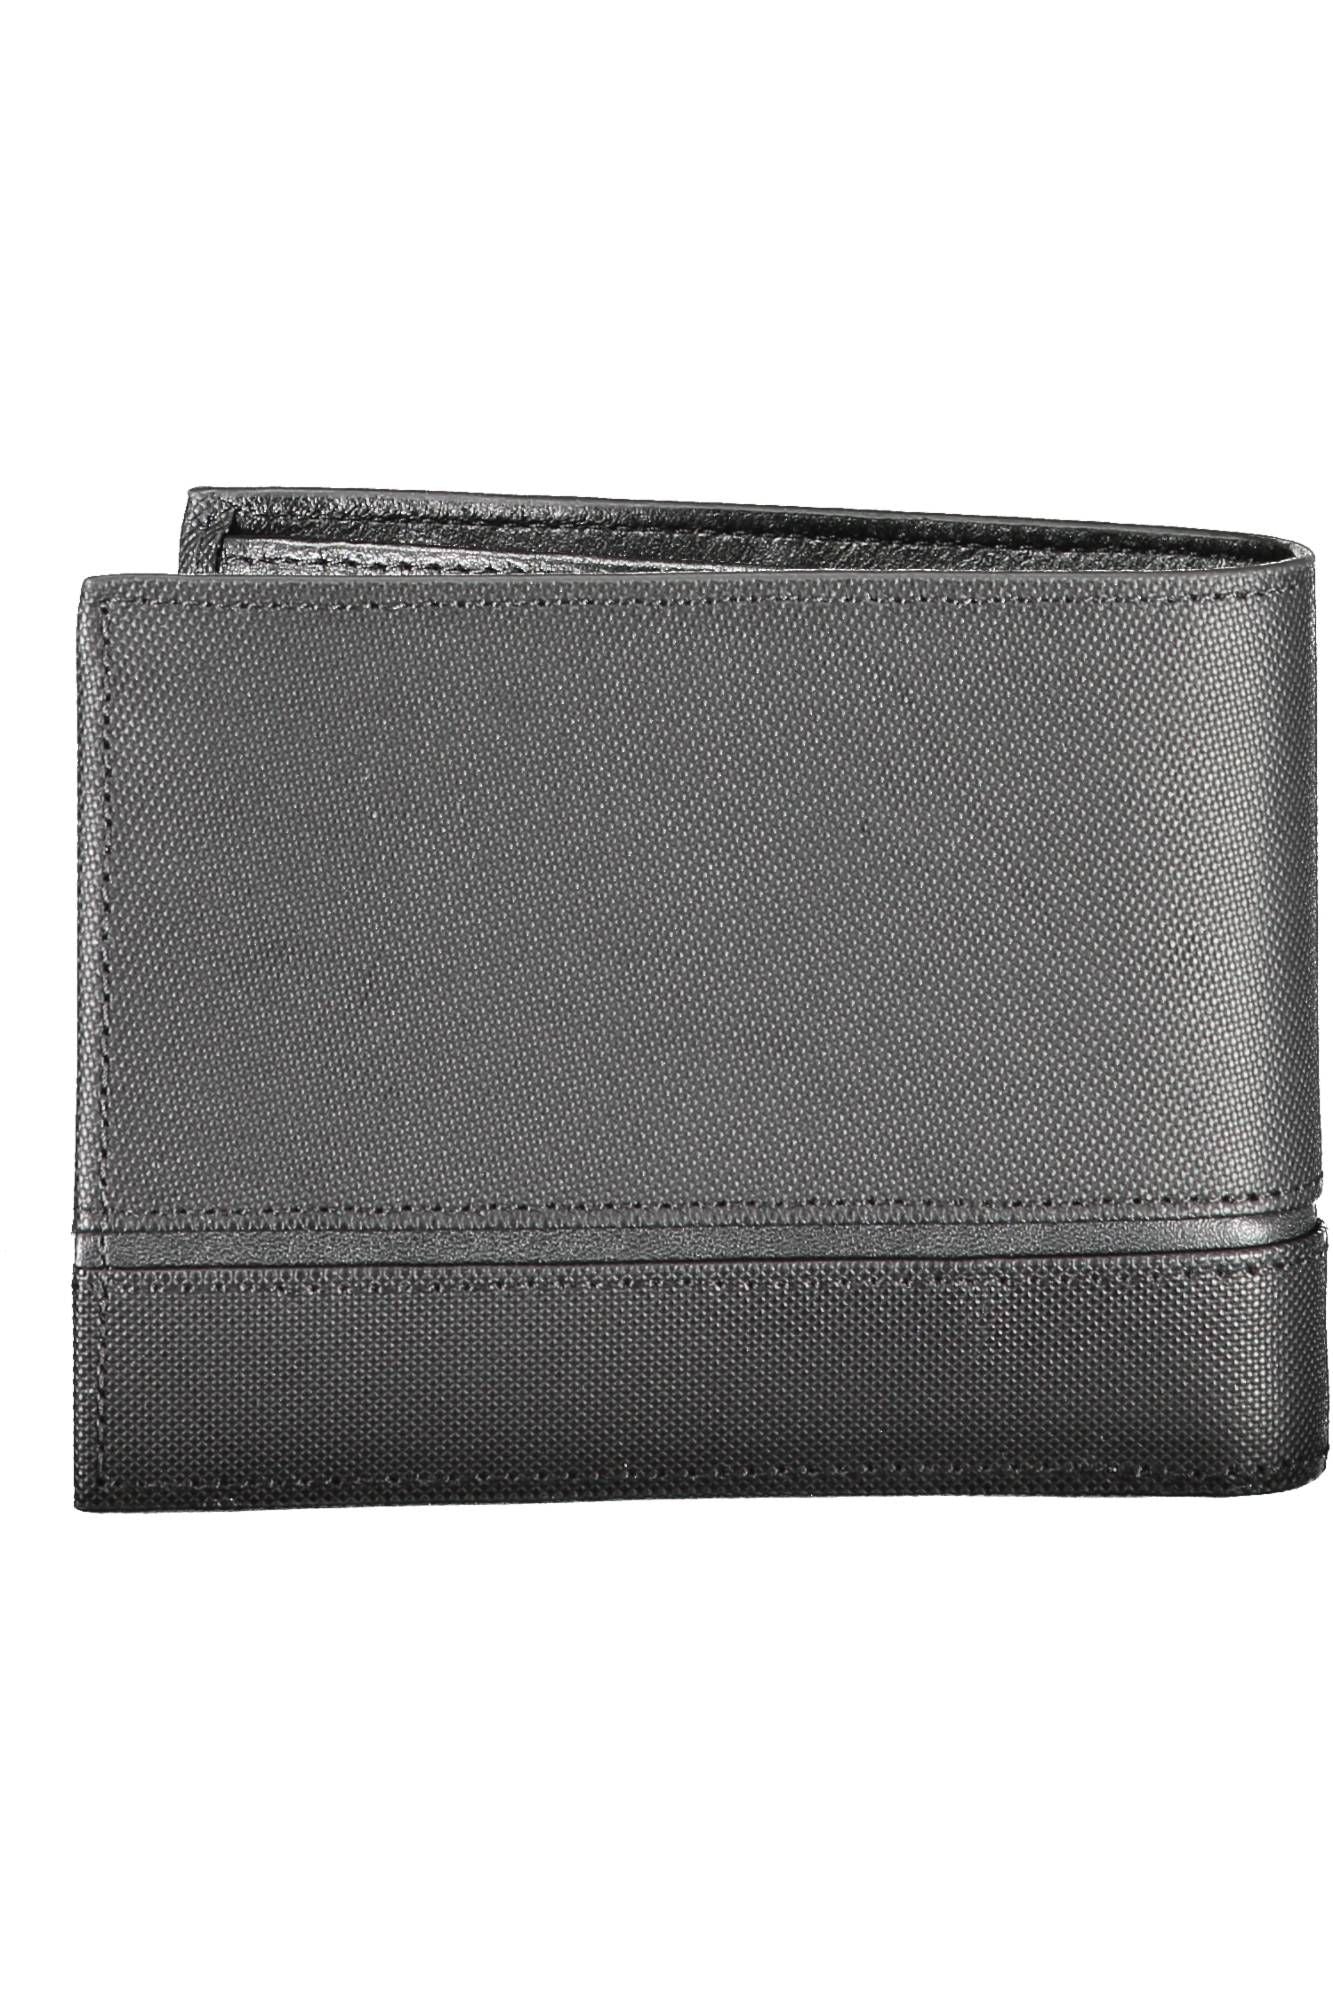 Calvin Klein Sleek Black Leather Wallet with RFID Block